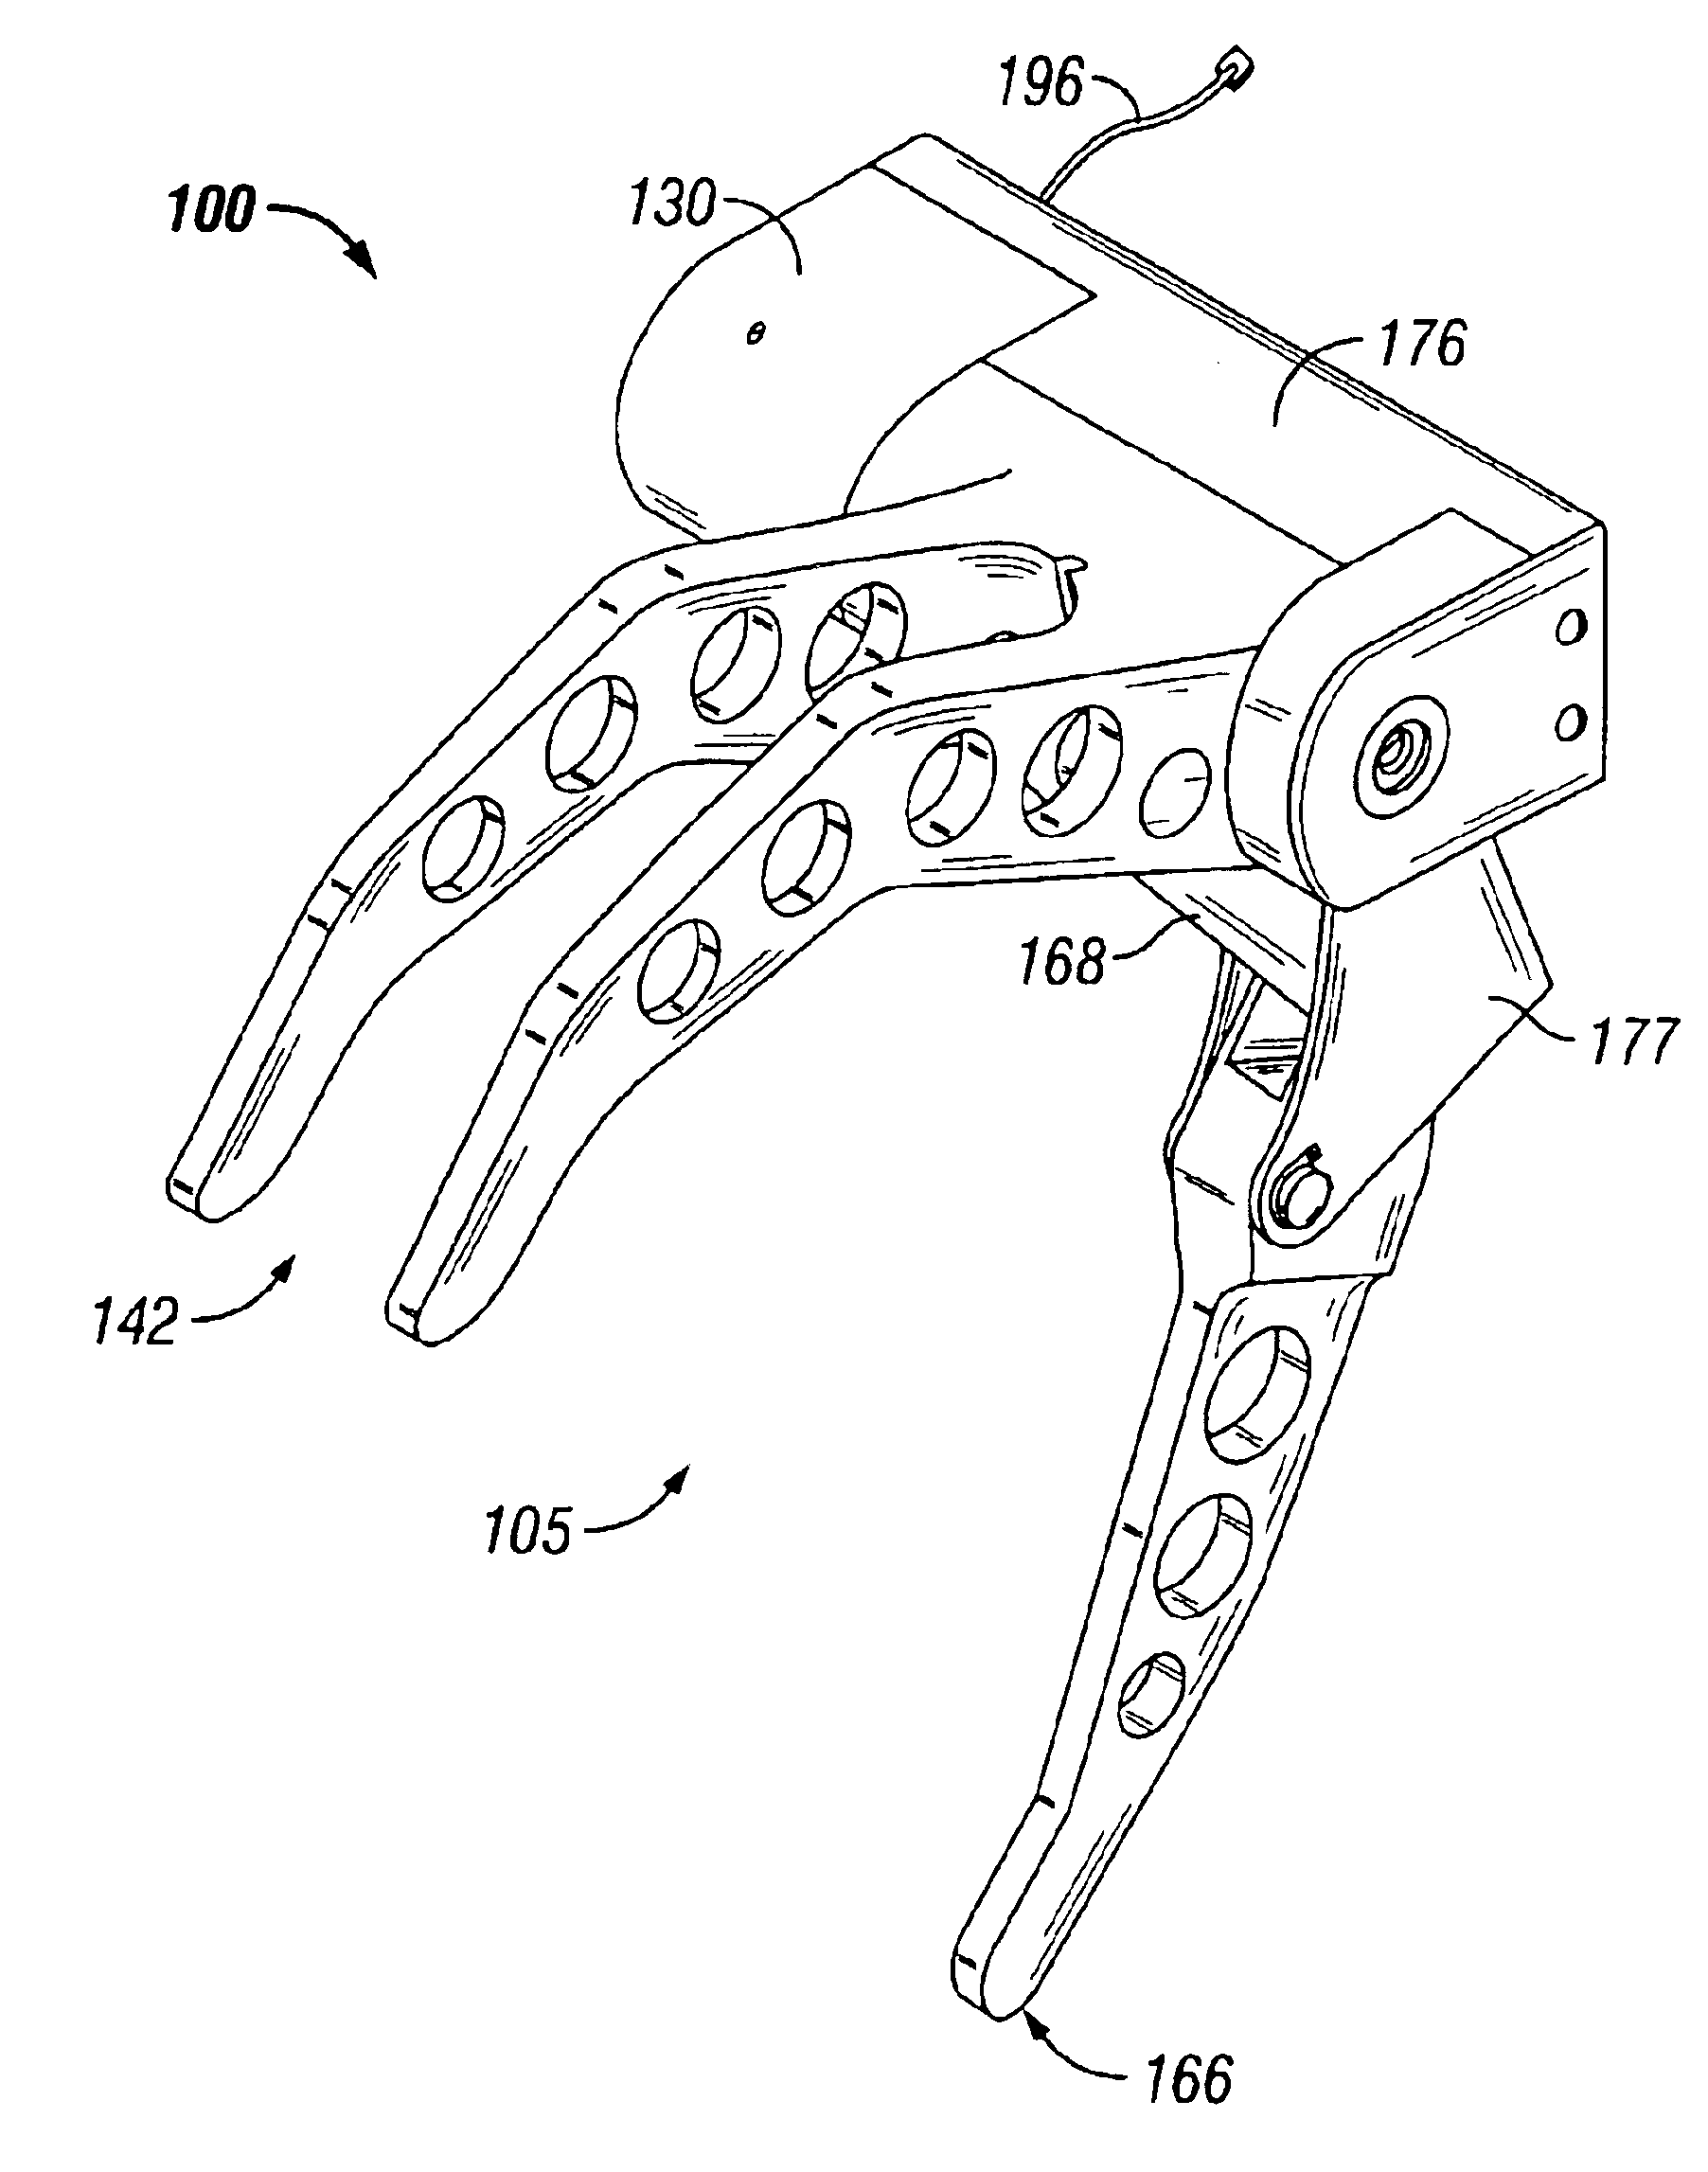 Externally-powered hand prosthesis